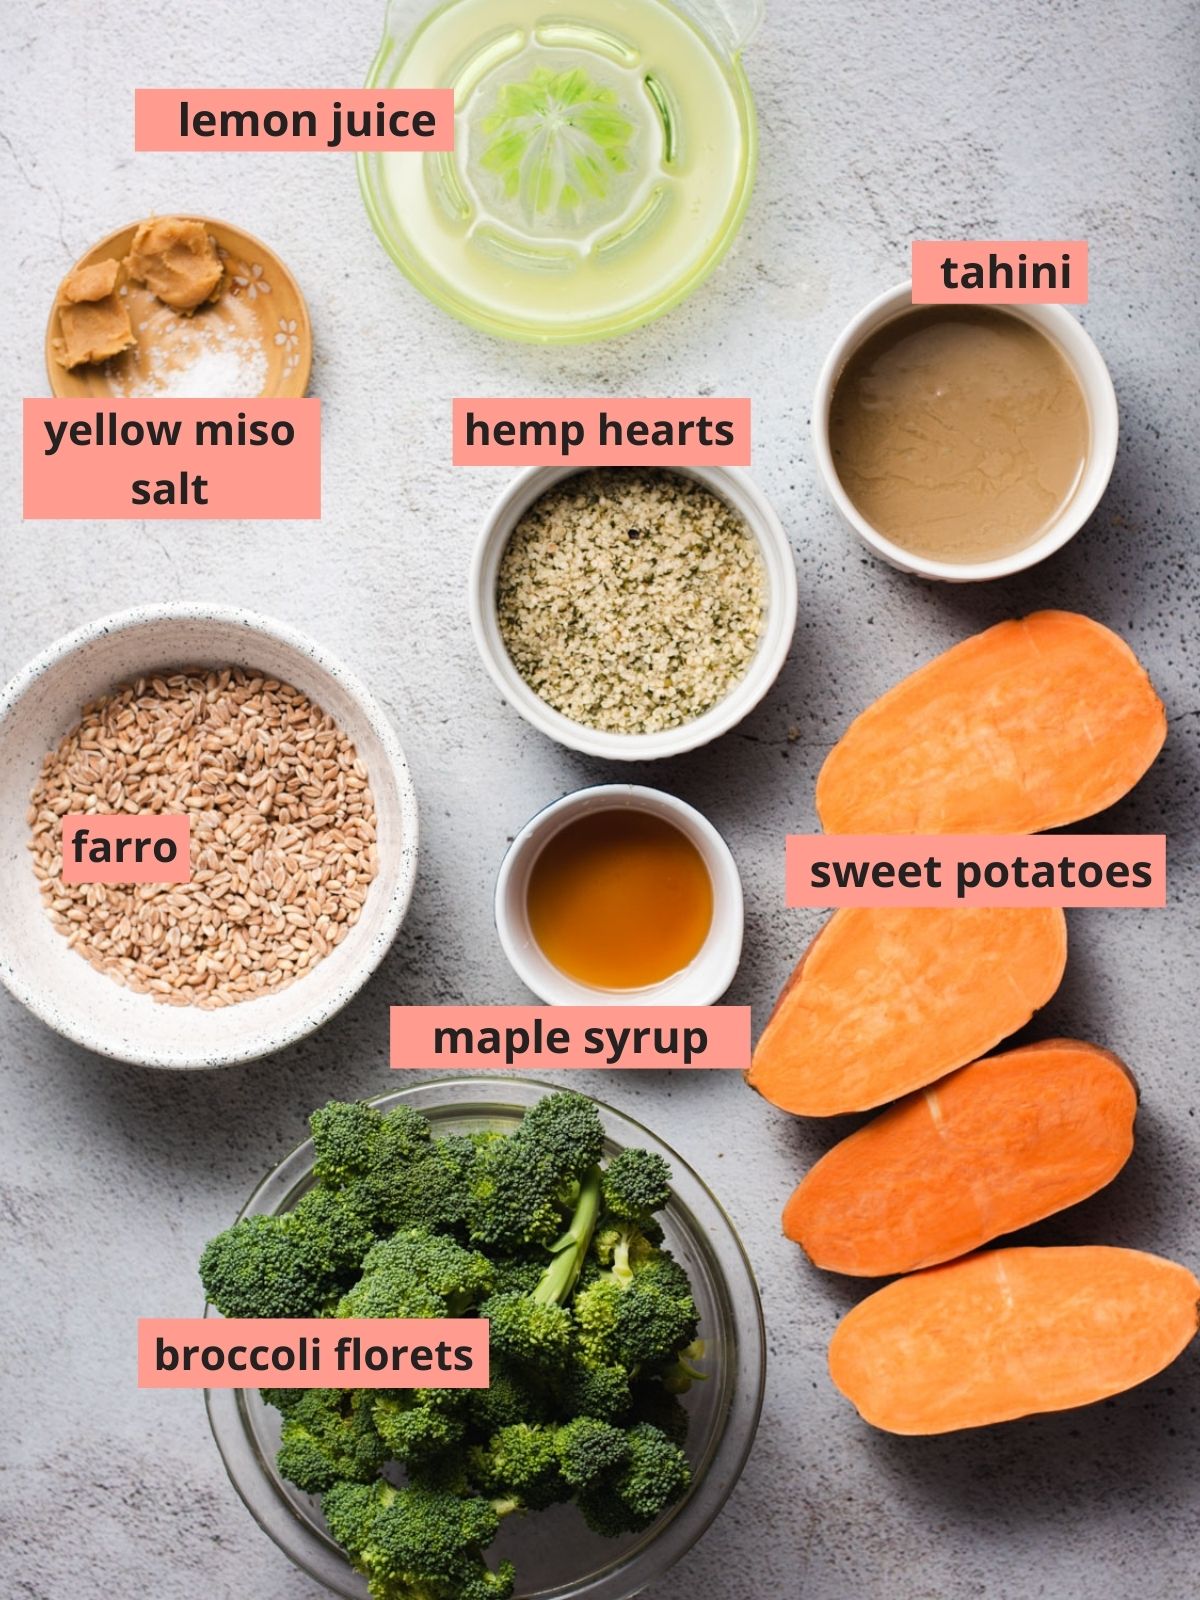 Labeled ingredients used to make sweet potato bowls.